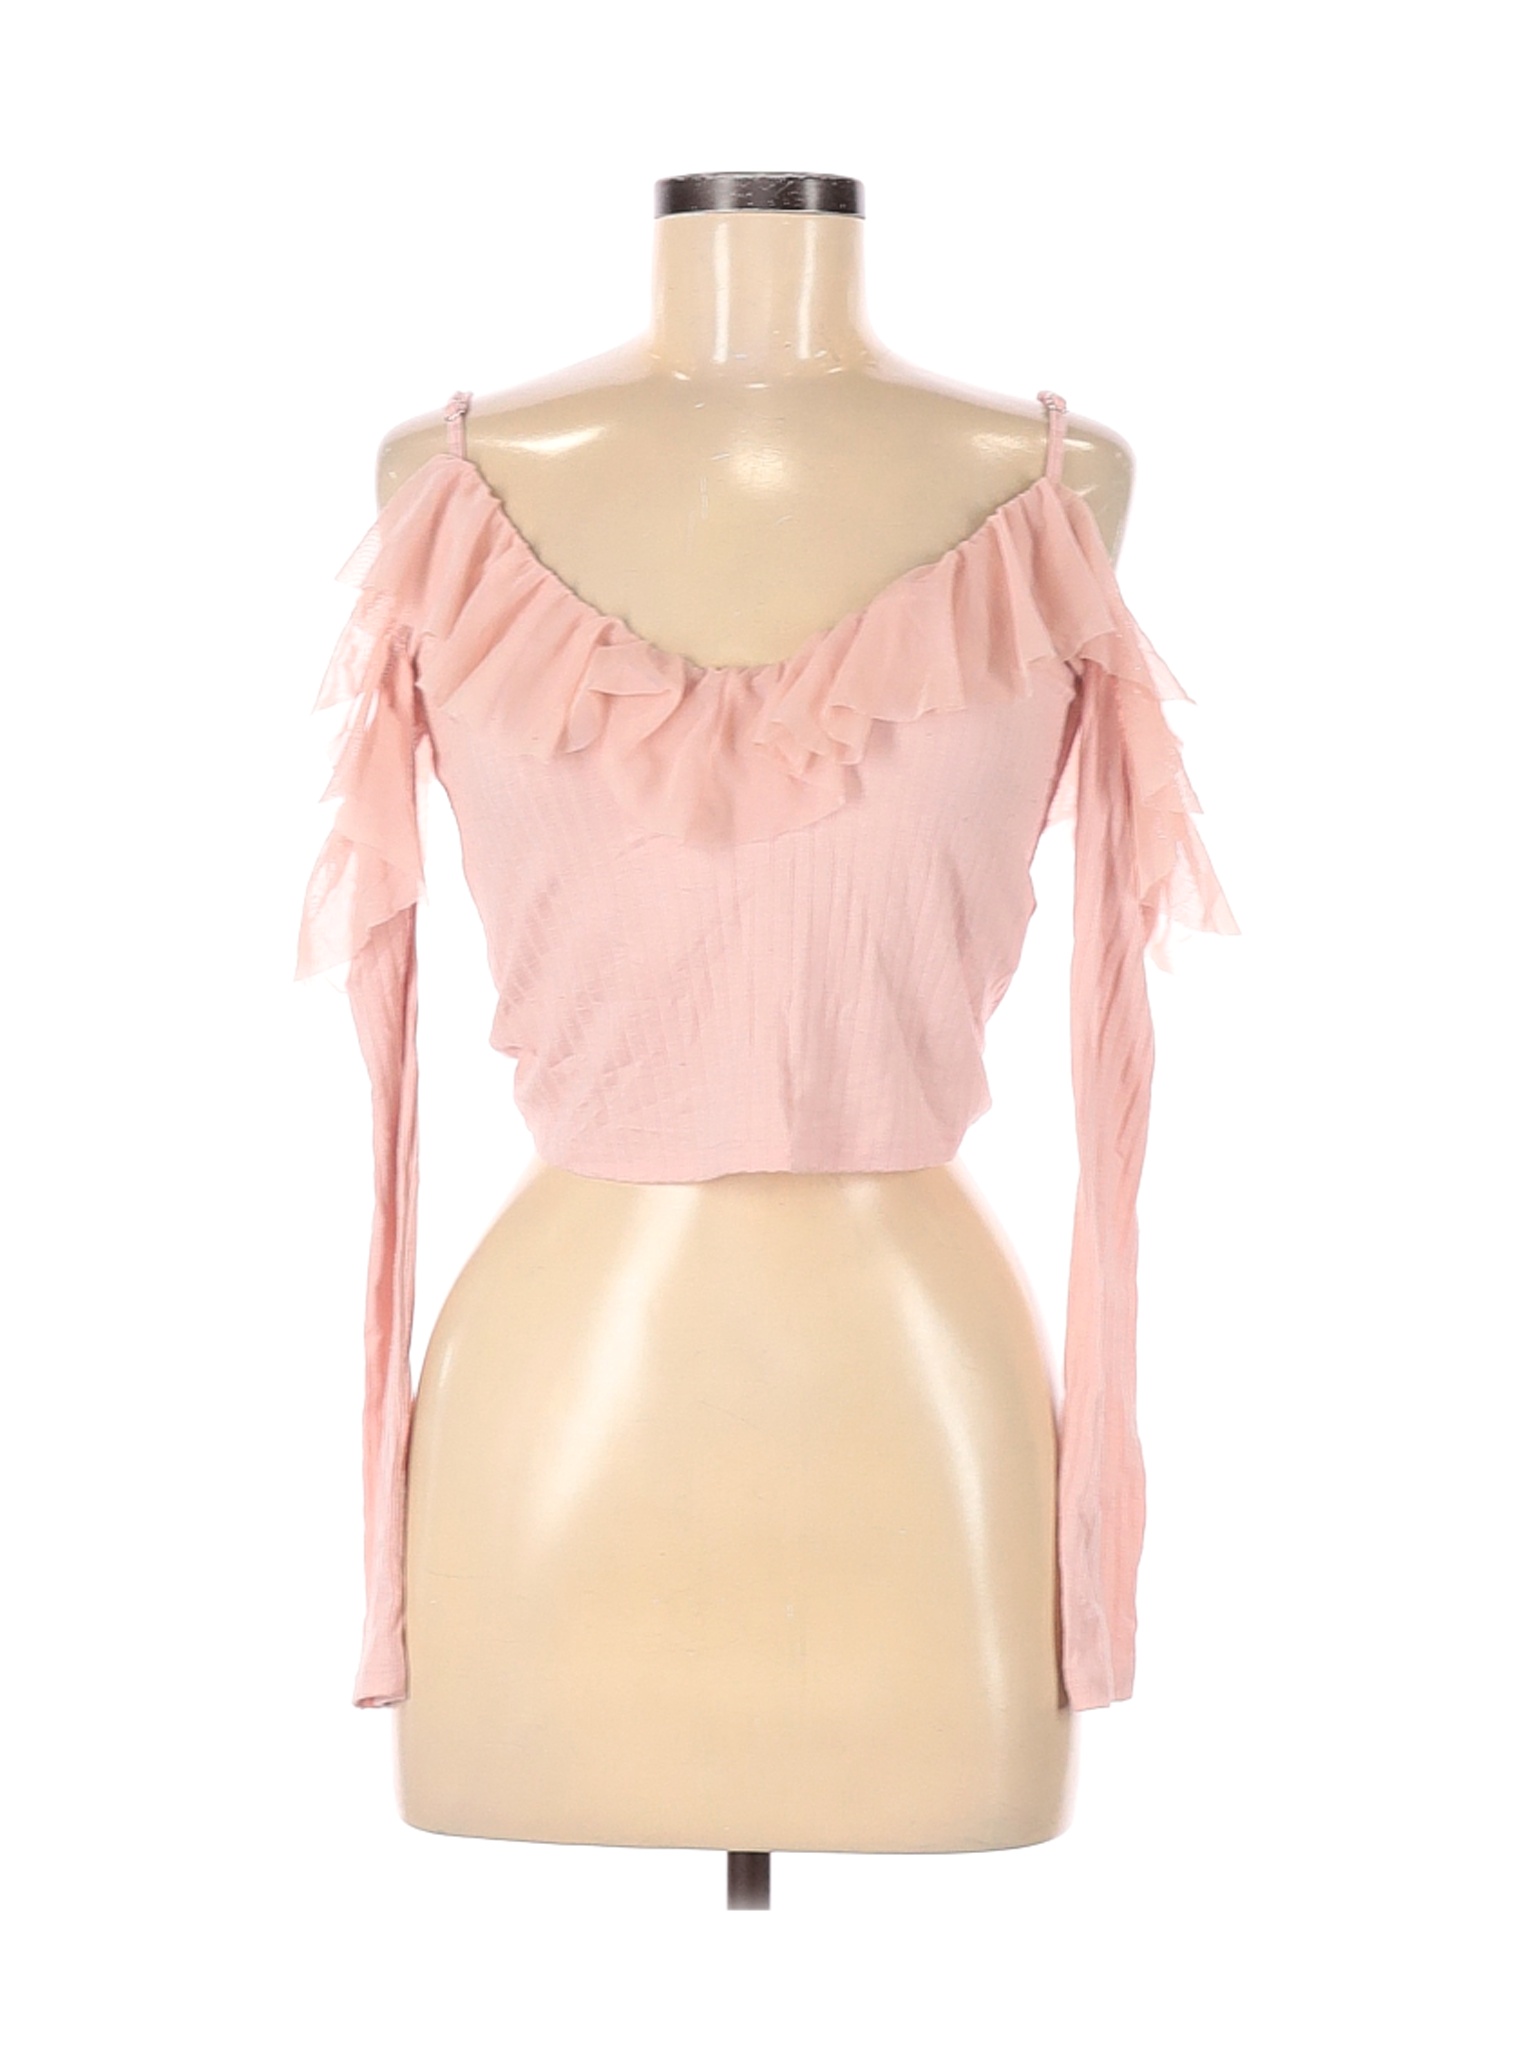 Forever 21 Women Pink Long Sleeve Top M | eBay